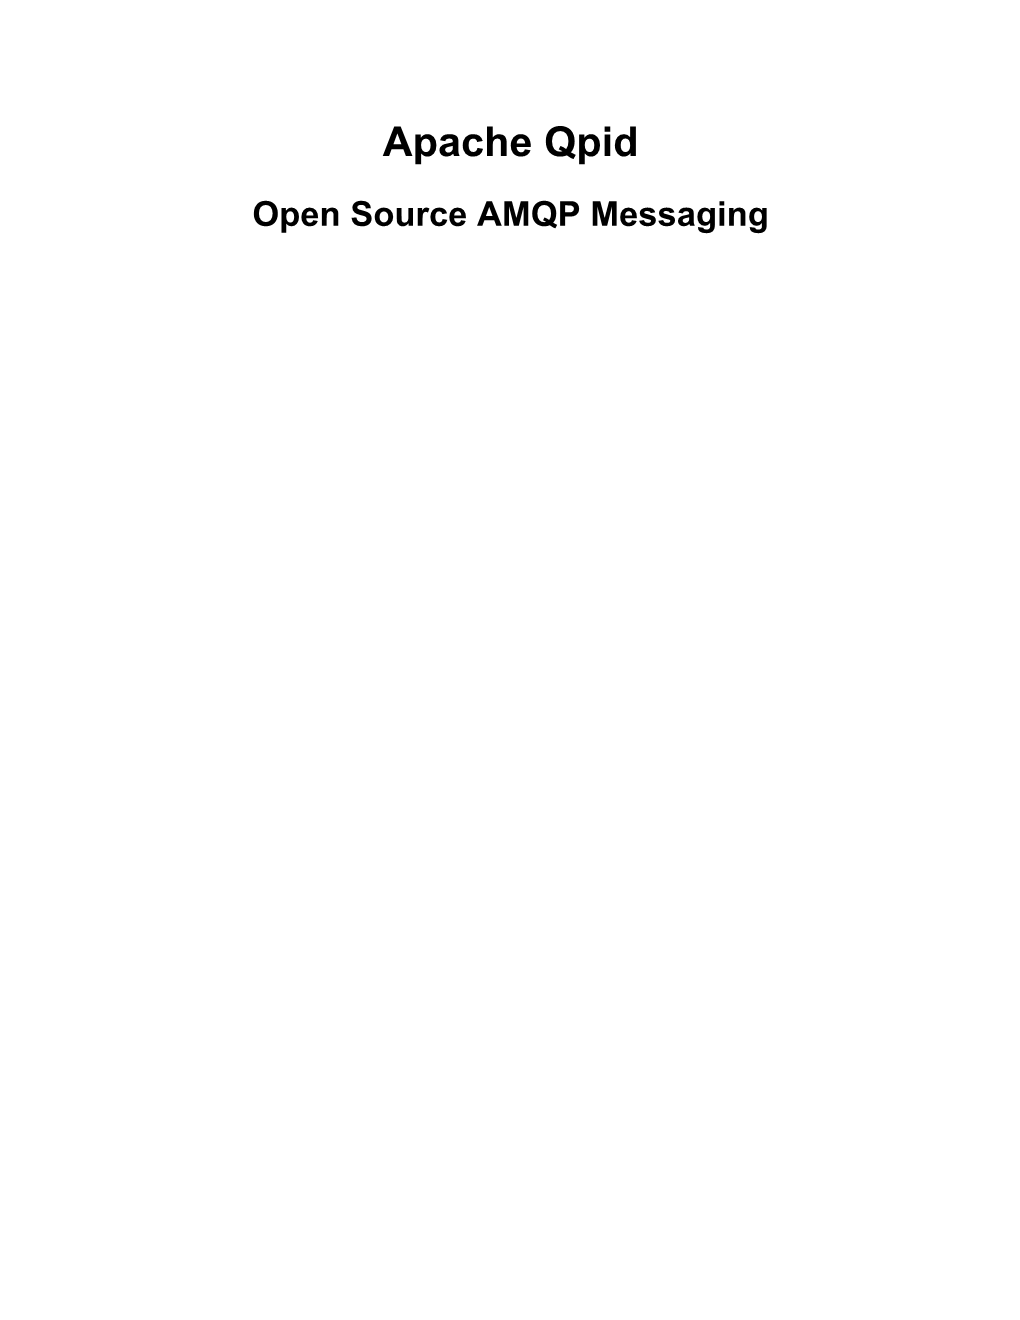 Apache Qpid Open Source AMQP Messaging Apache Qpid: Open Source AMQP Messaging